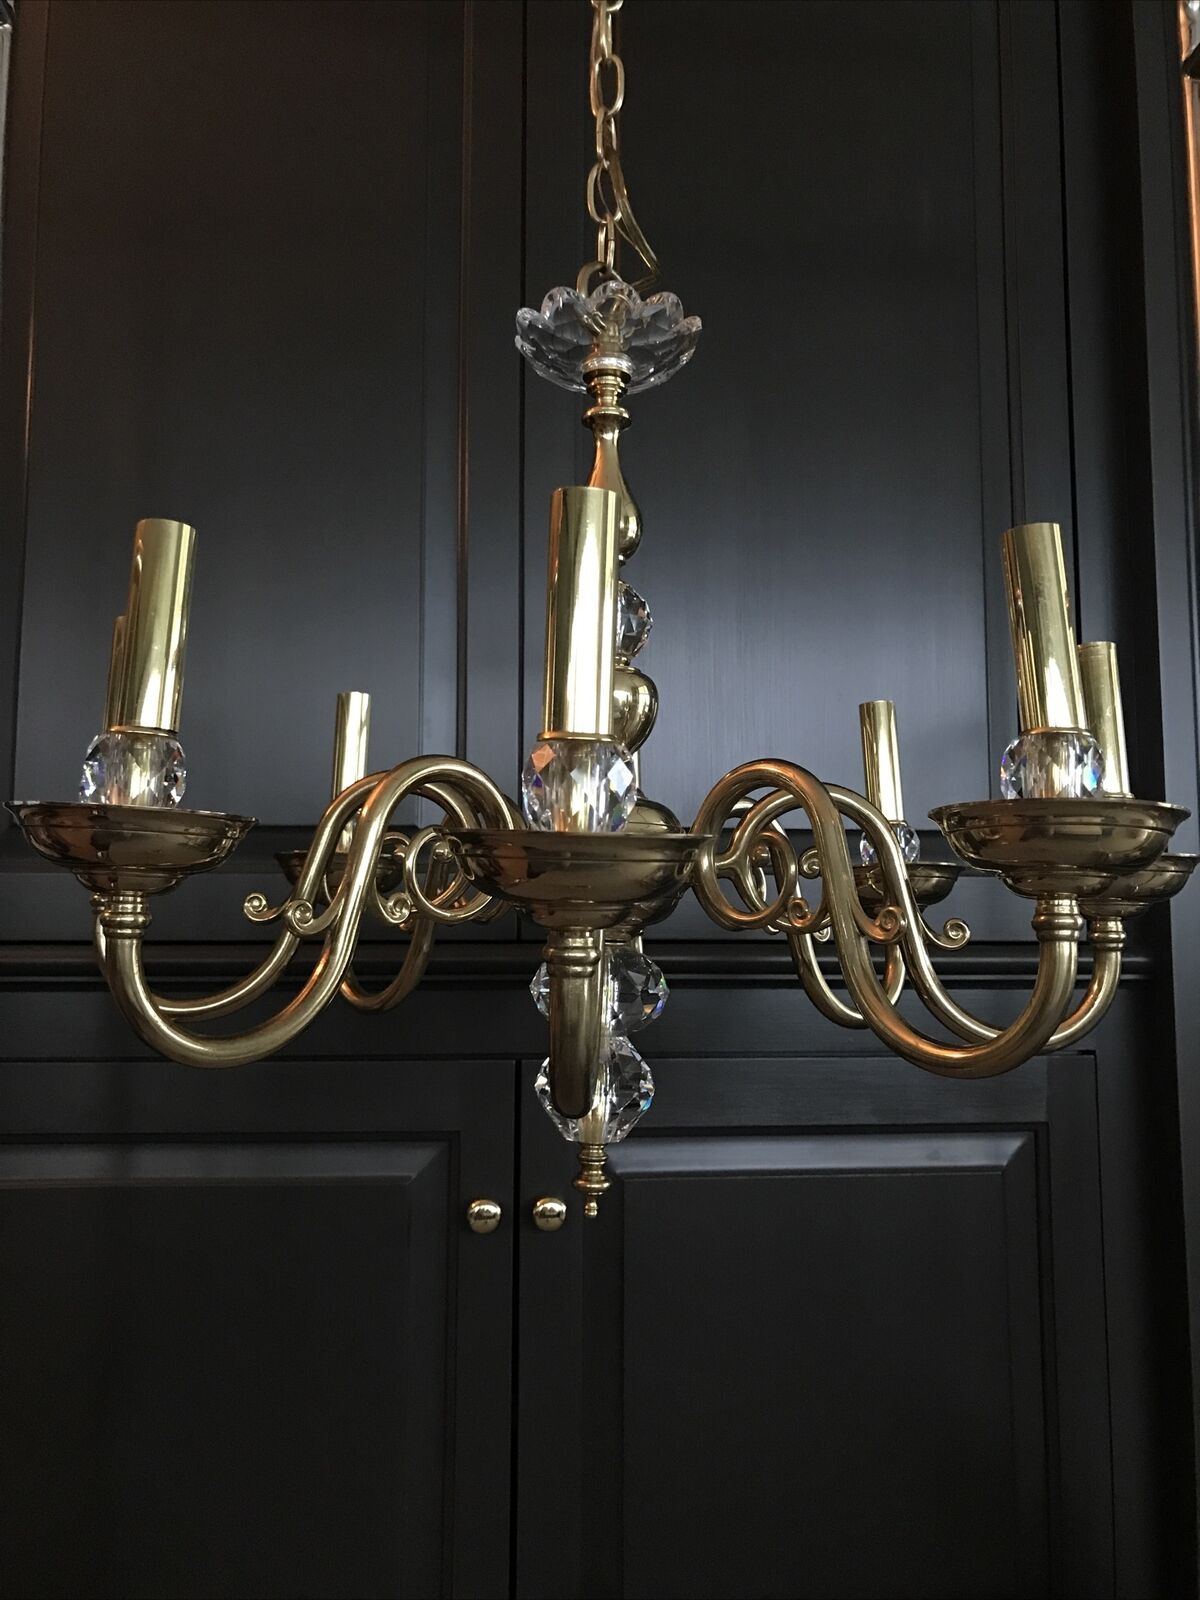 BEAUTIFUL Stately Brass Chandelier by Georgian Art Lighting Designs 25"